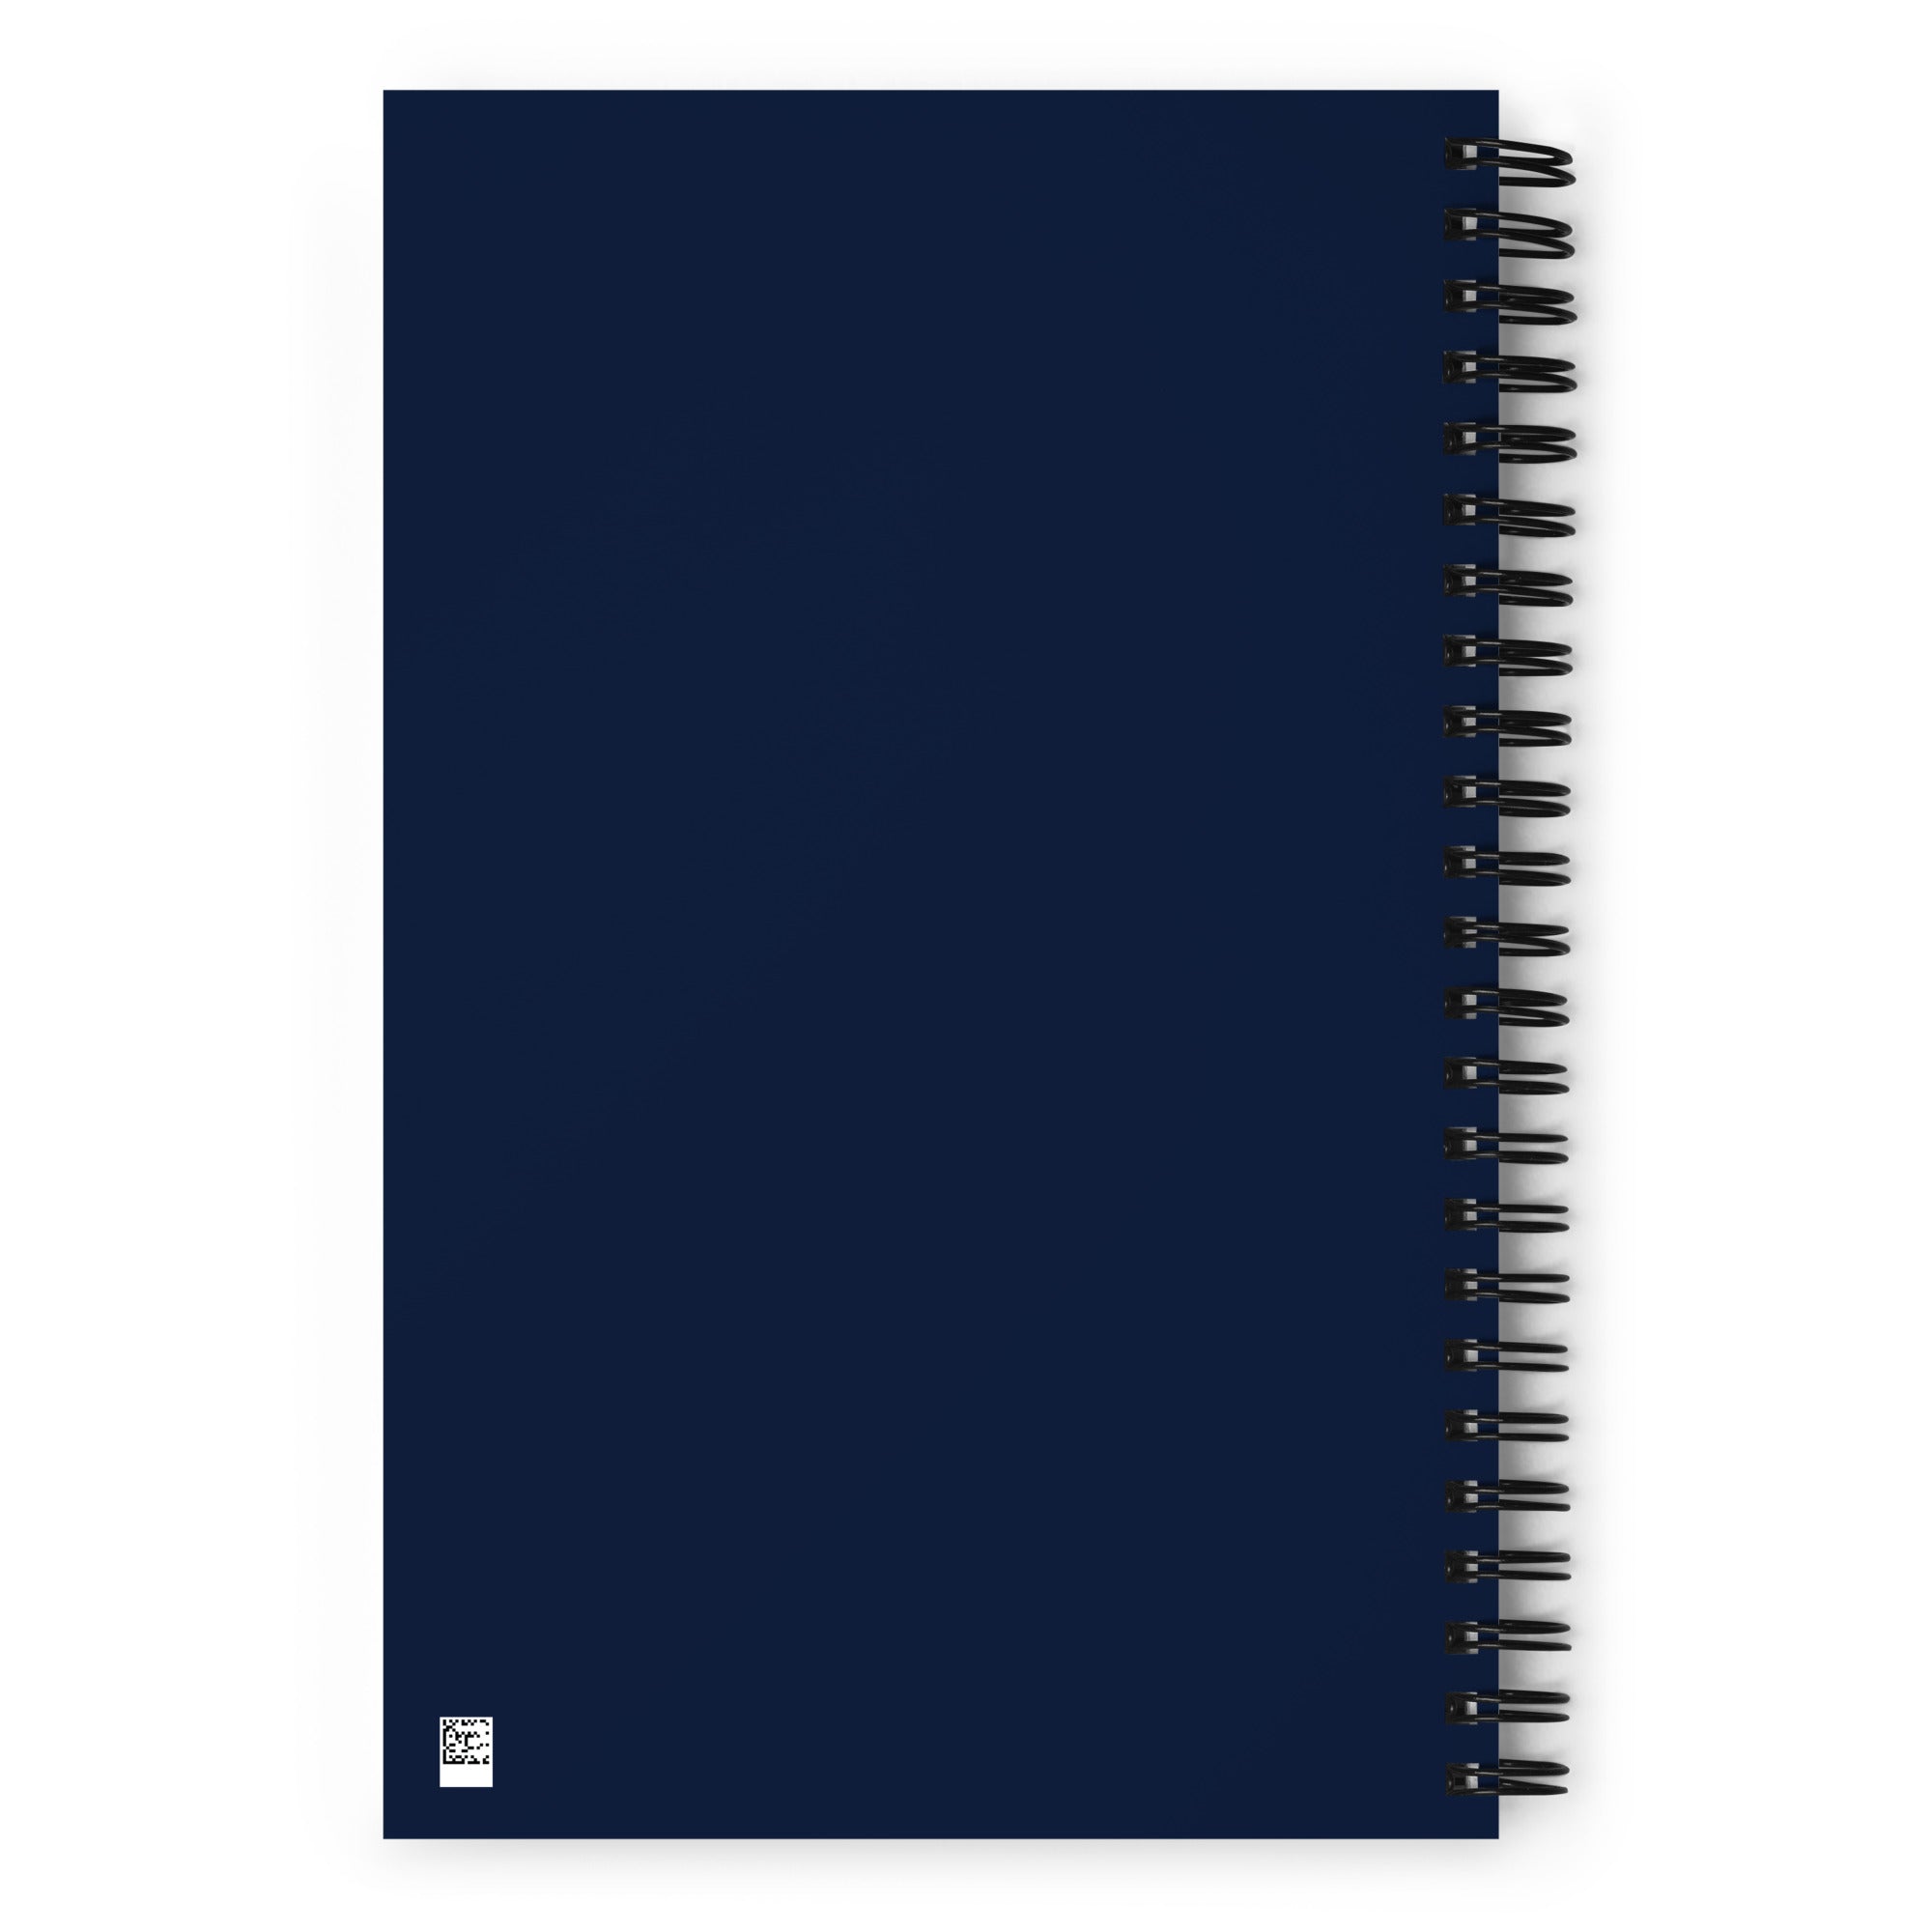 BOWS Spiral notebook